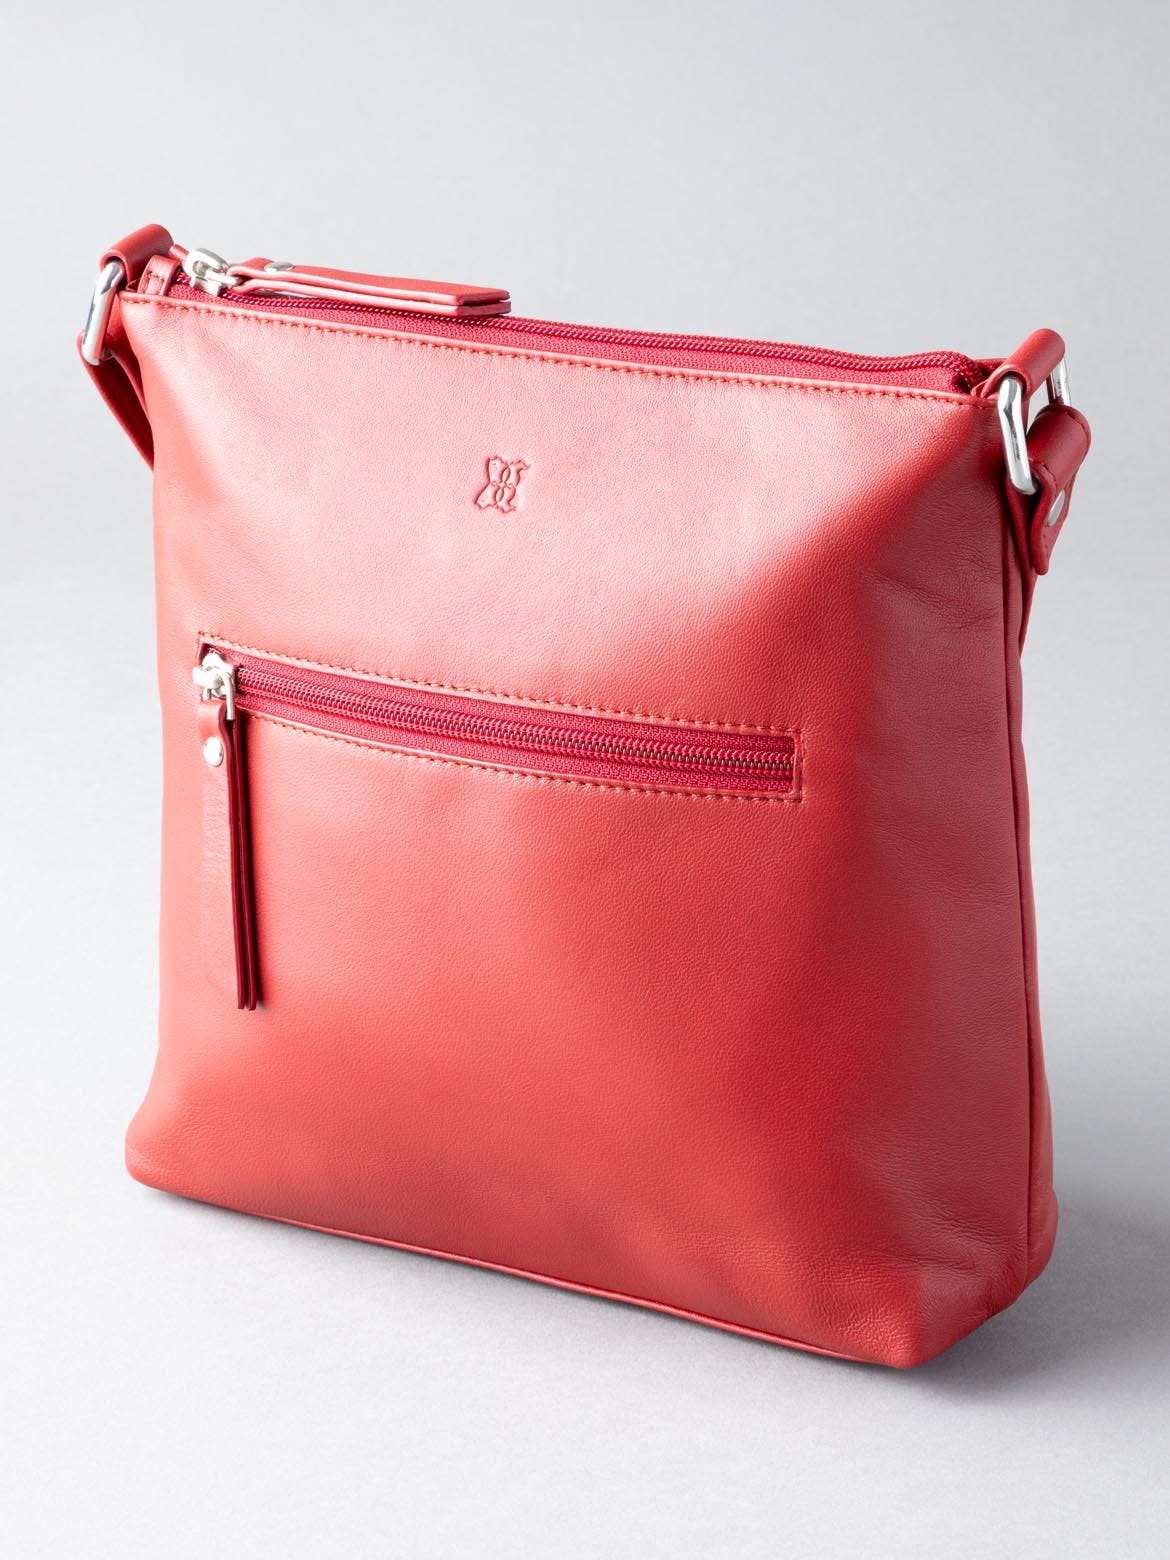 Crossbody Bag/purse Featuring U of L Cardinals Leather -  UK